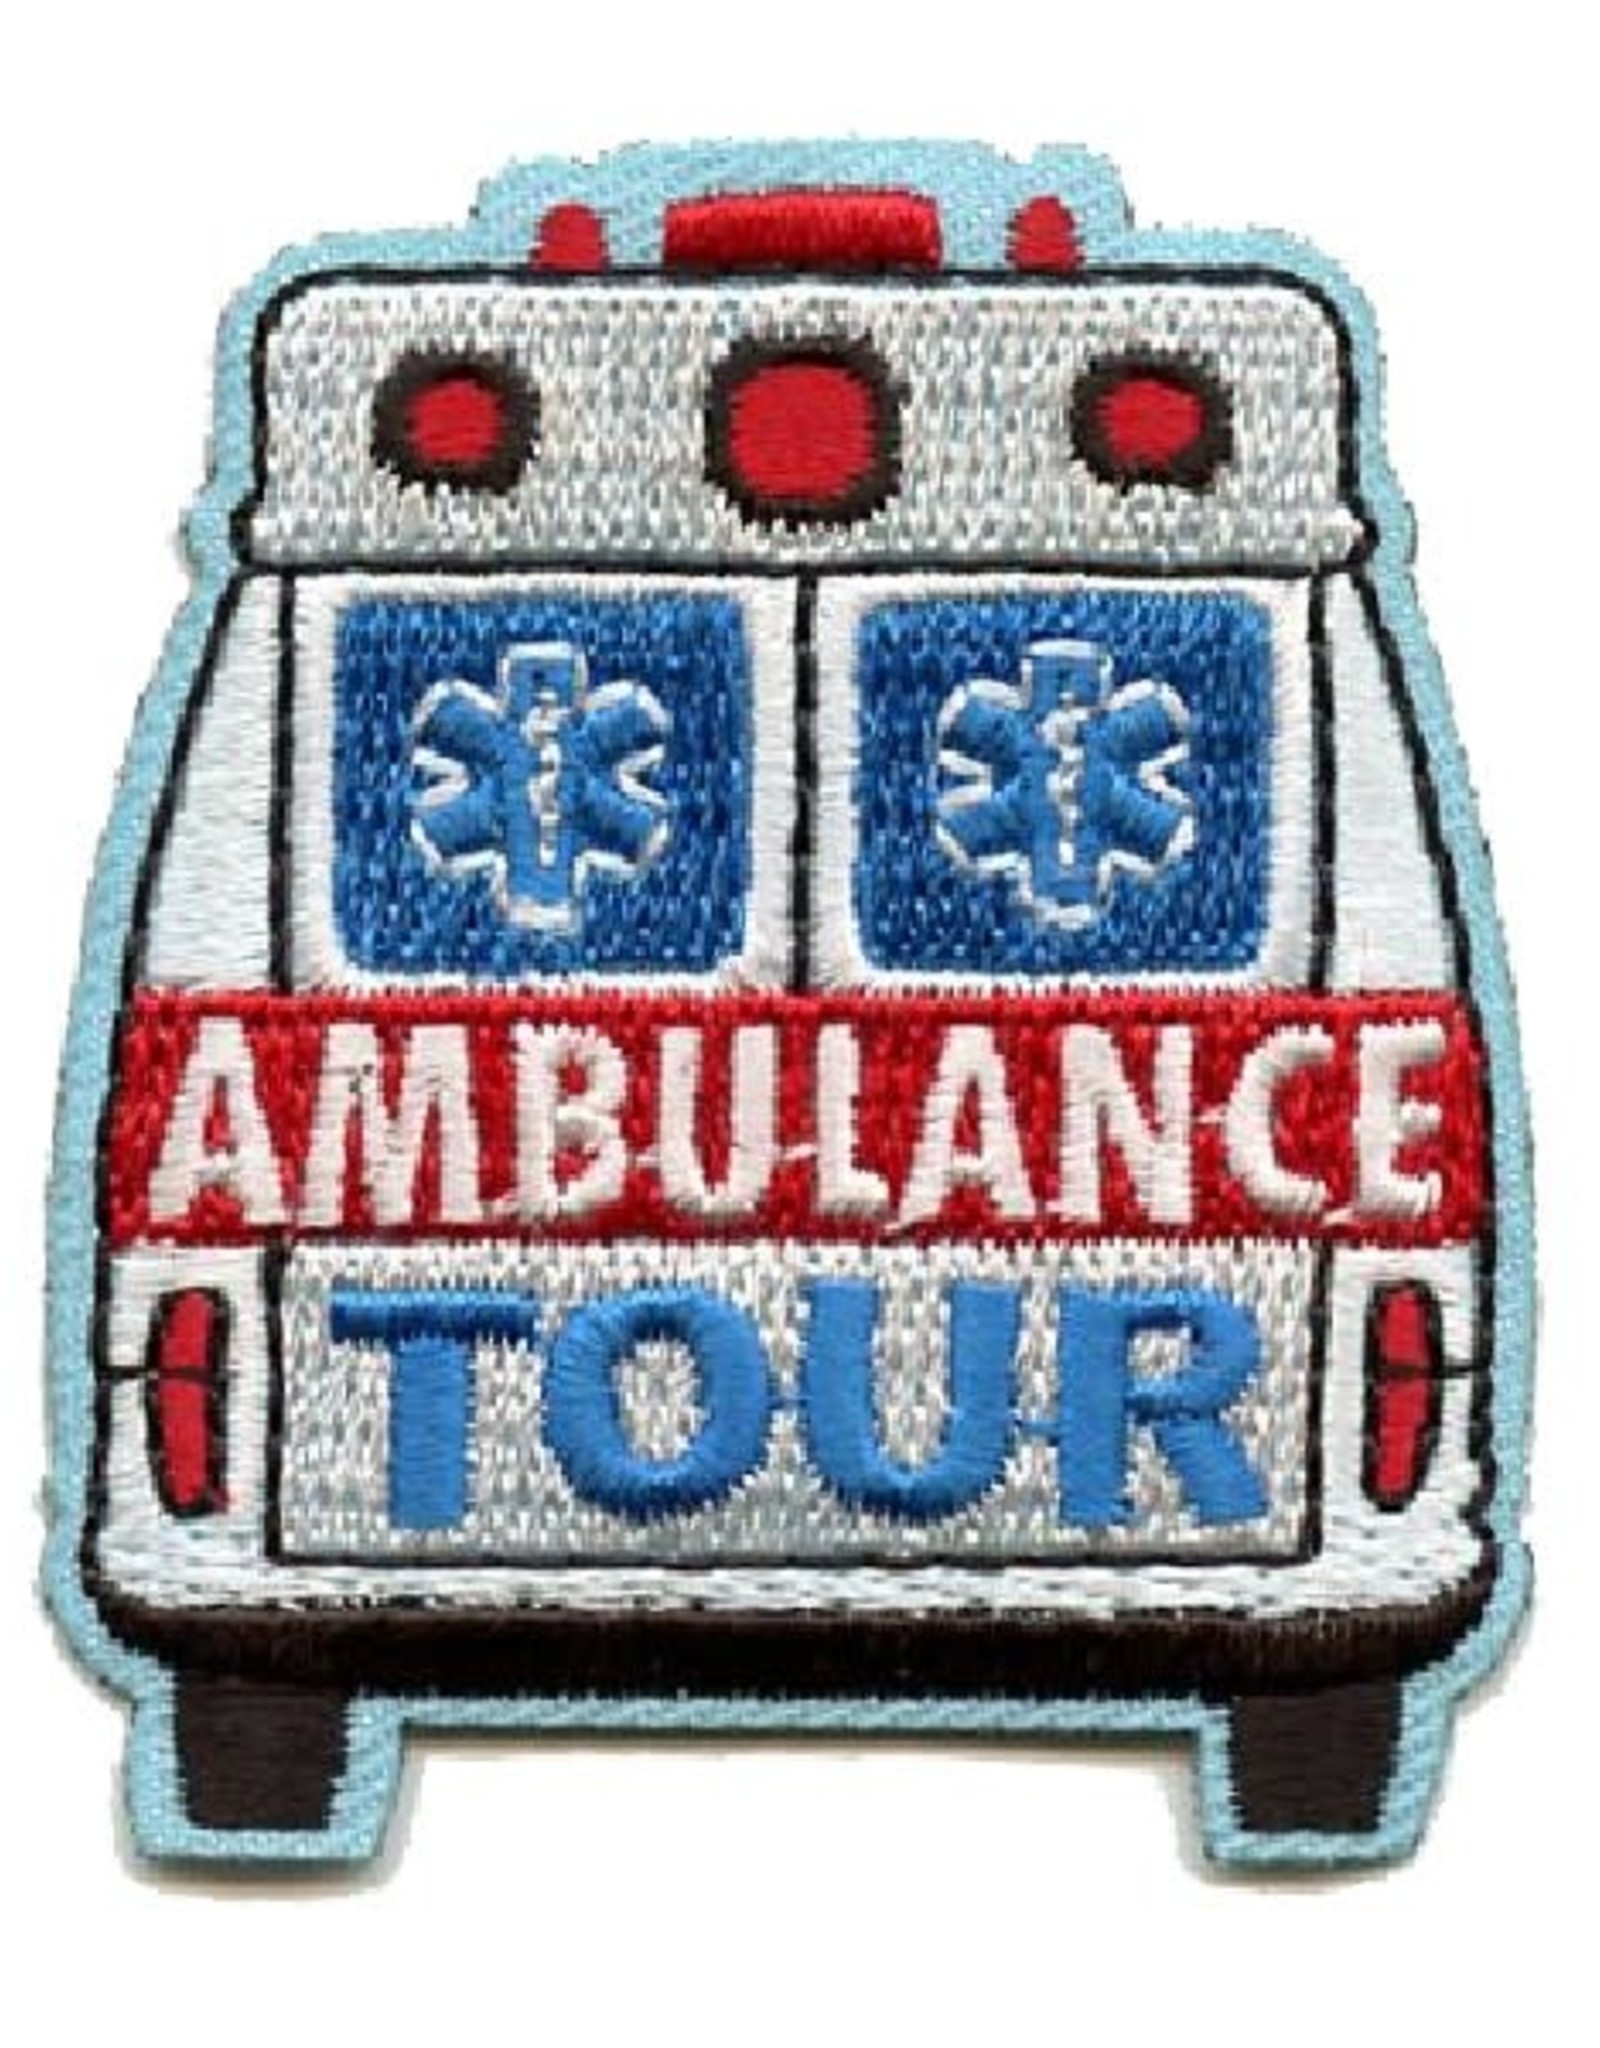 Advantage Emblem & Screen Prnt *Ambulance Tour Fun Patch